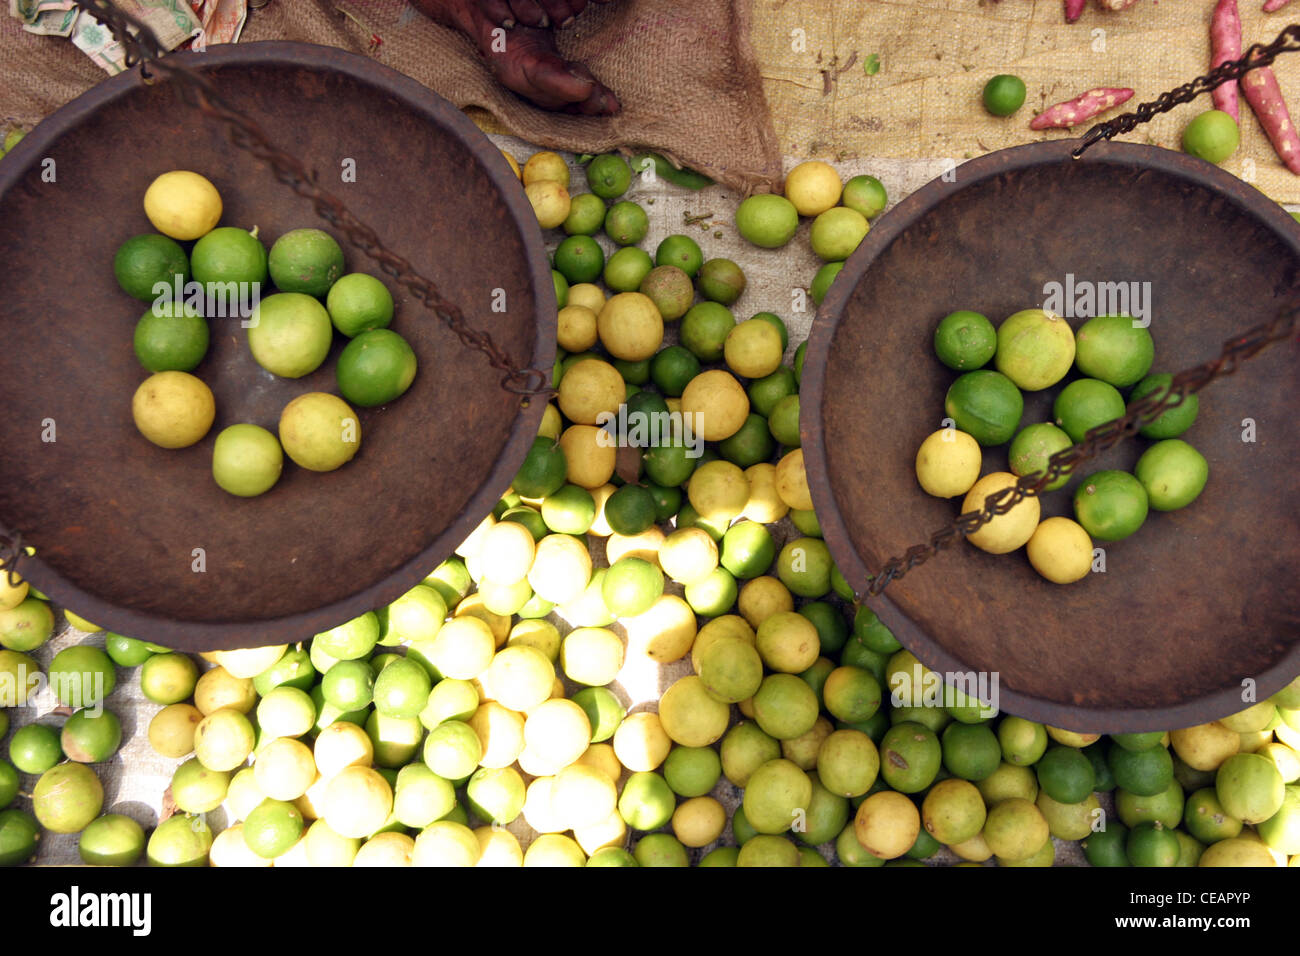 A set of weighing scales with lemons and limes, Hikkaduwa Market, Sri Lanka Stock Photo